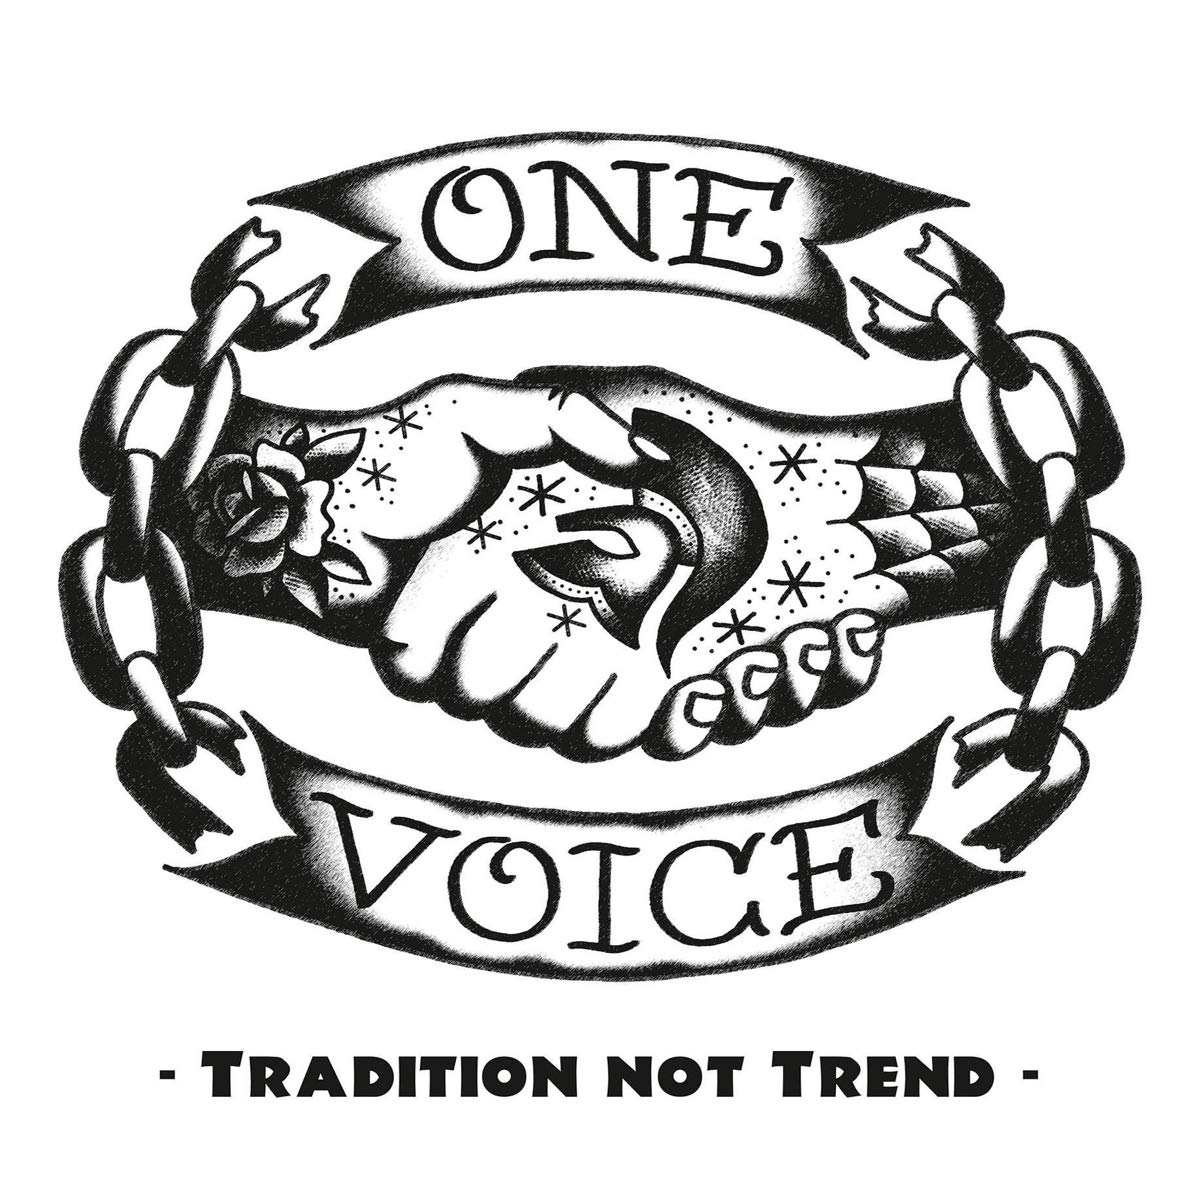 Tradition Not Trend [Vinyl LP]